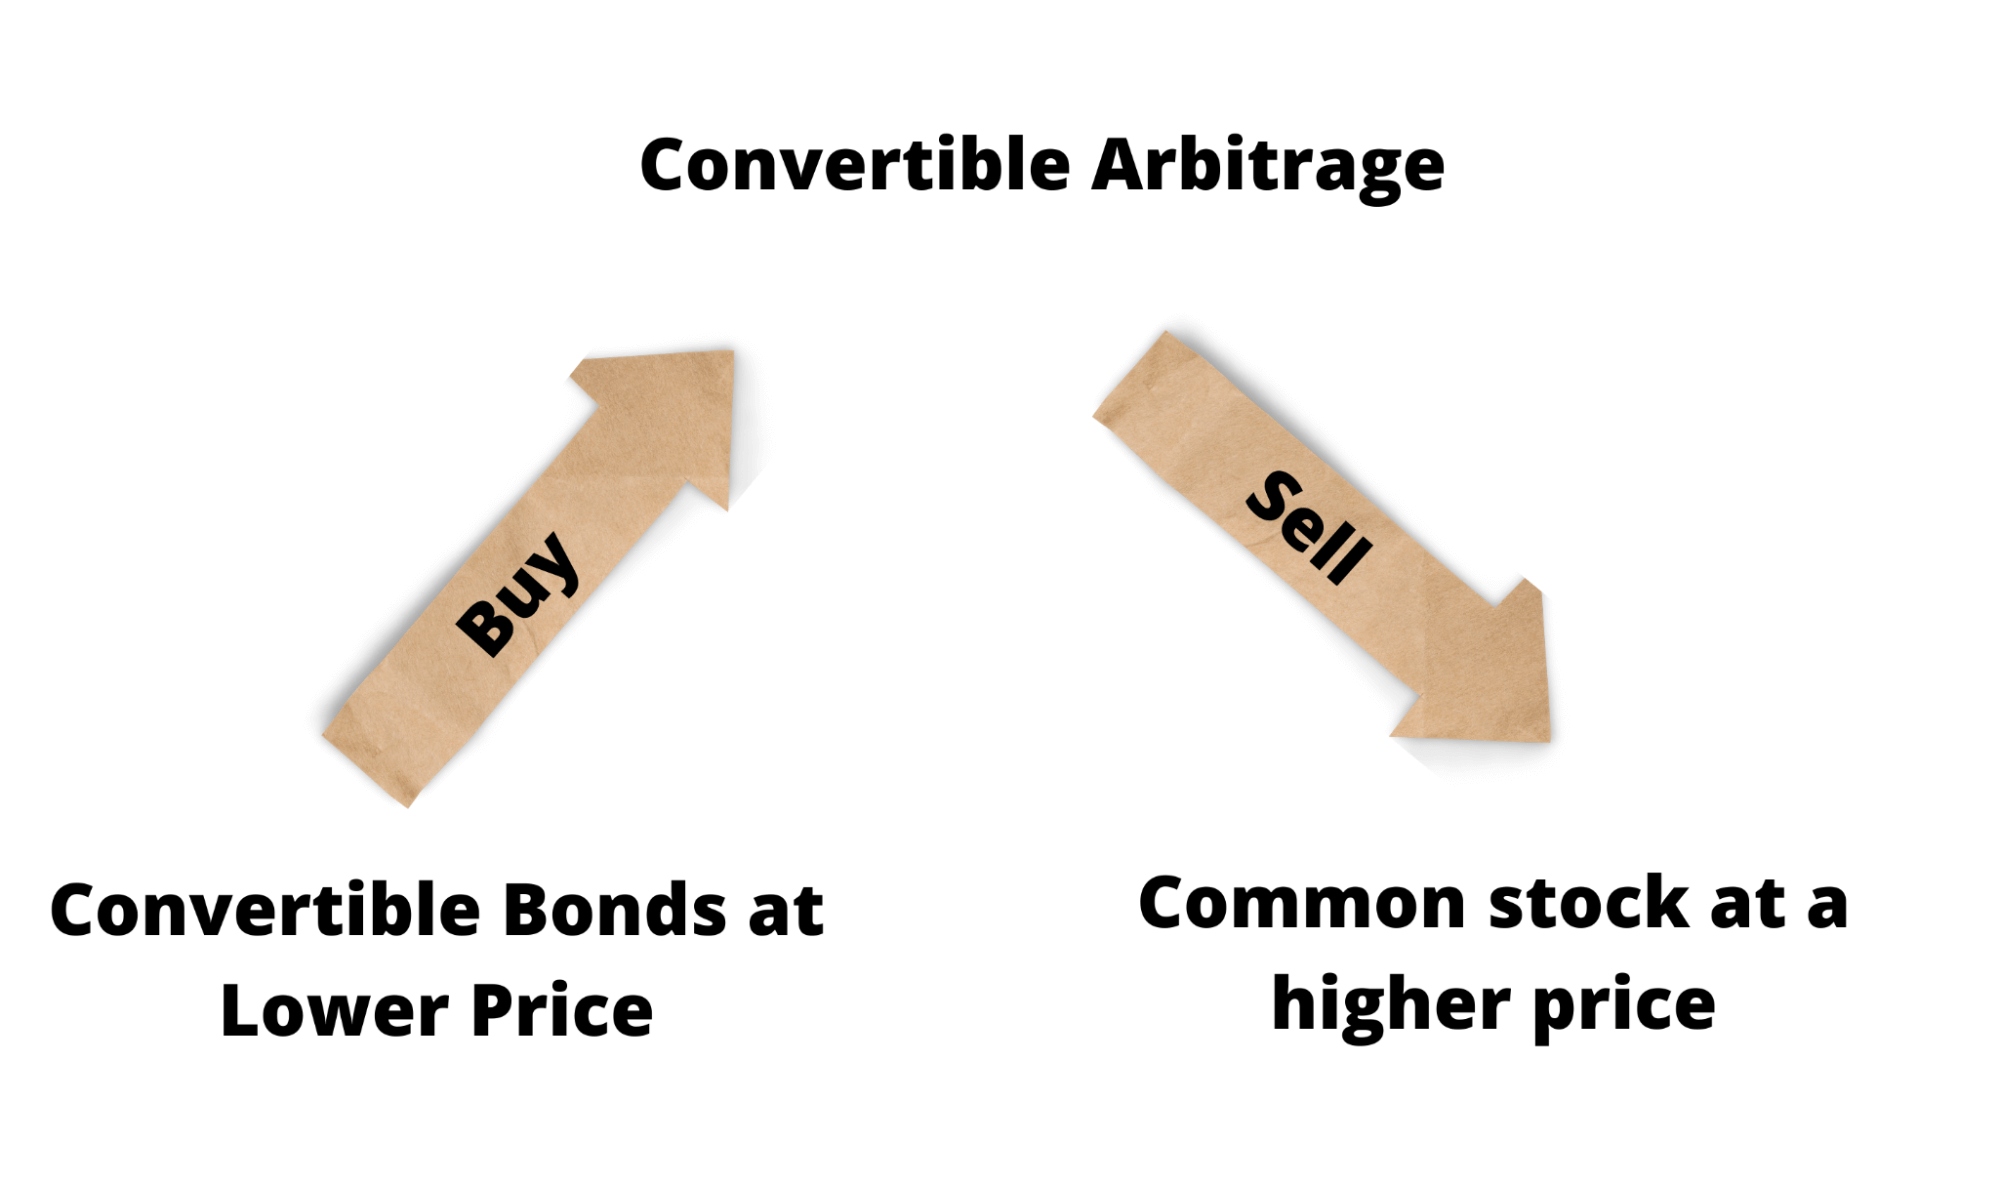 Convertible arbitrage